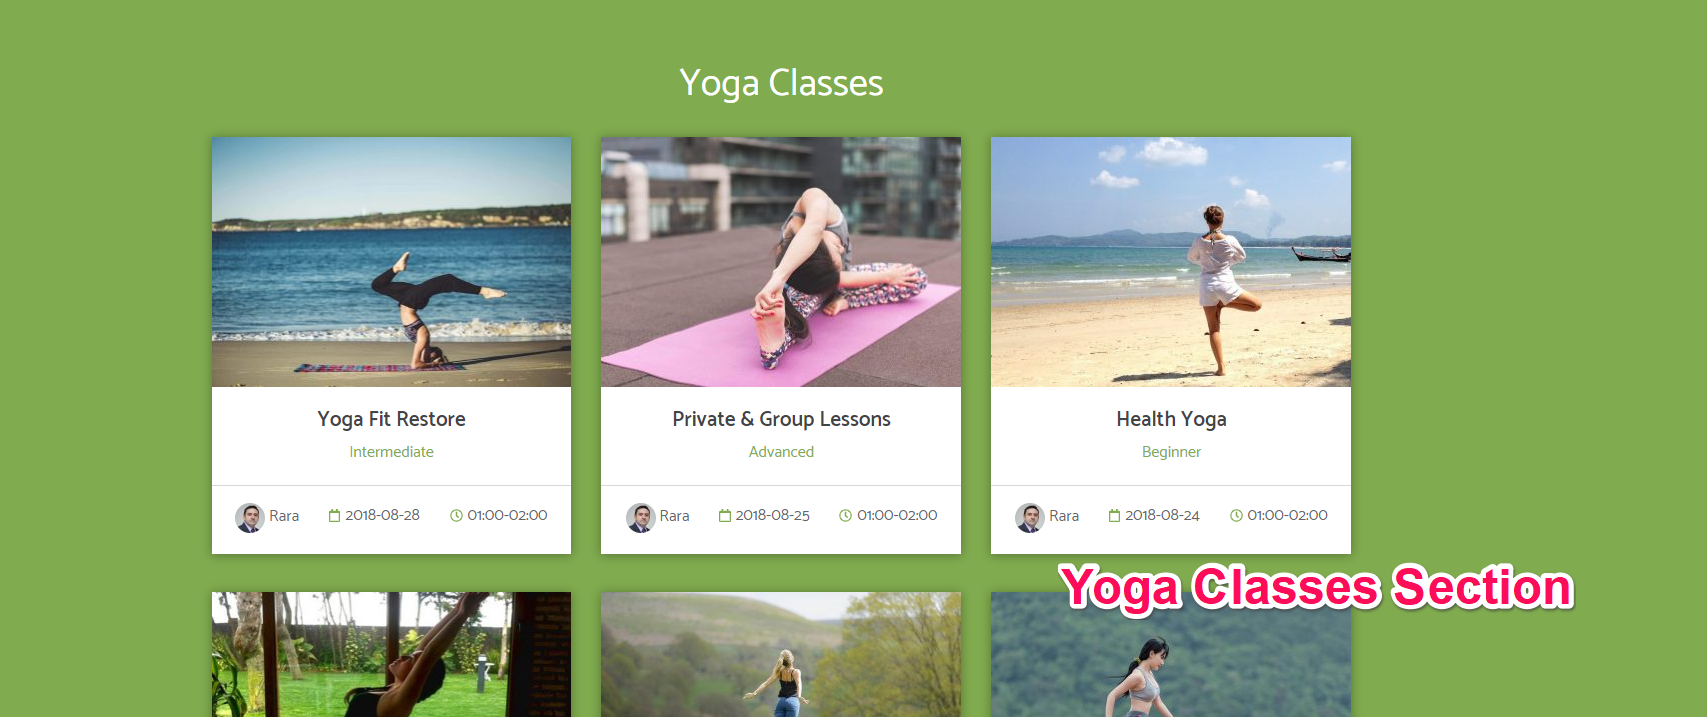 Yoga Classes Section